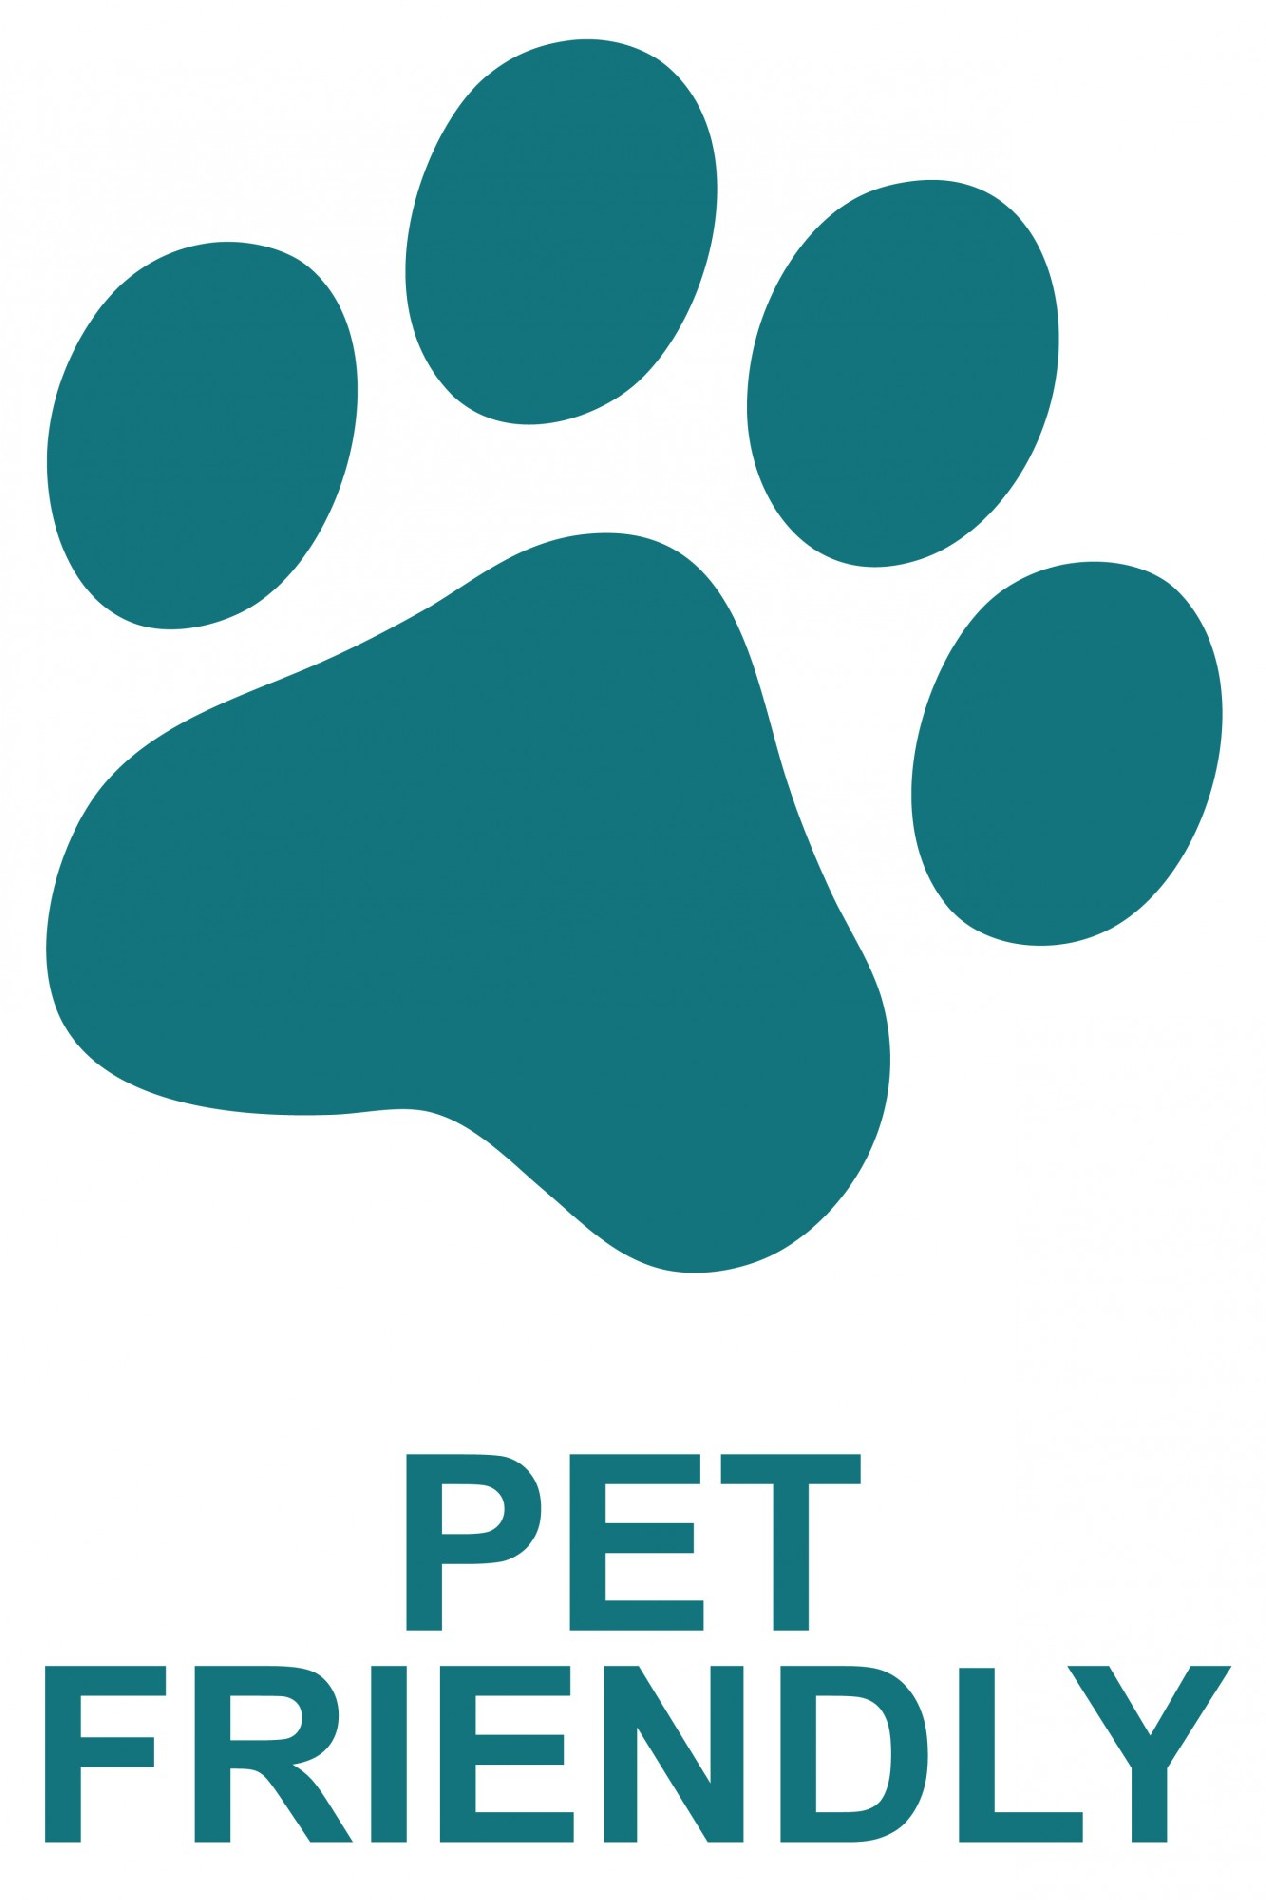 Френдли билеты. Иконка Pet friendly. ПЭТ френдли. Pet friendly лого. Pet friendly наклейка.